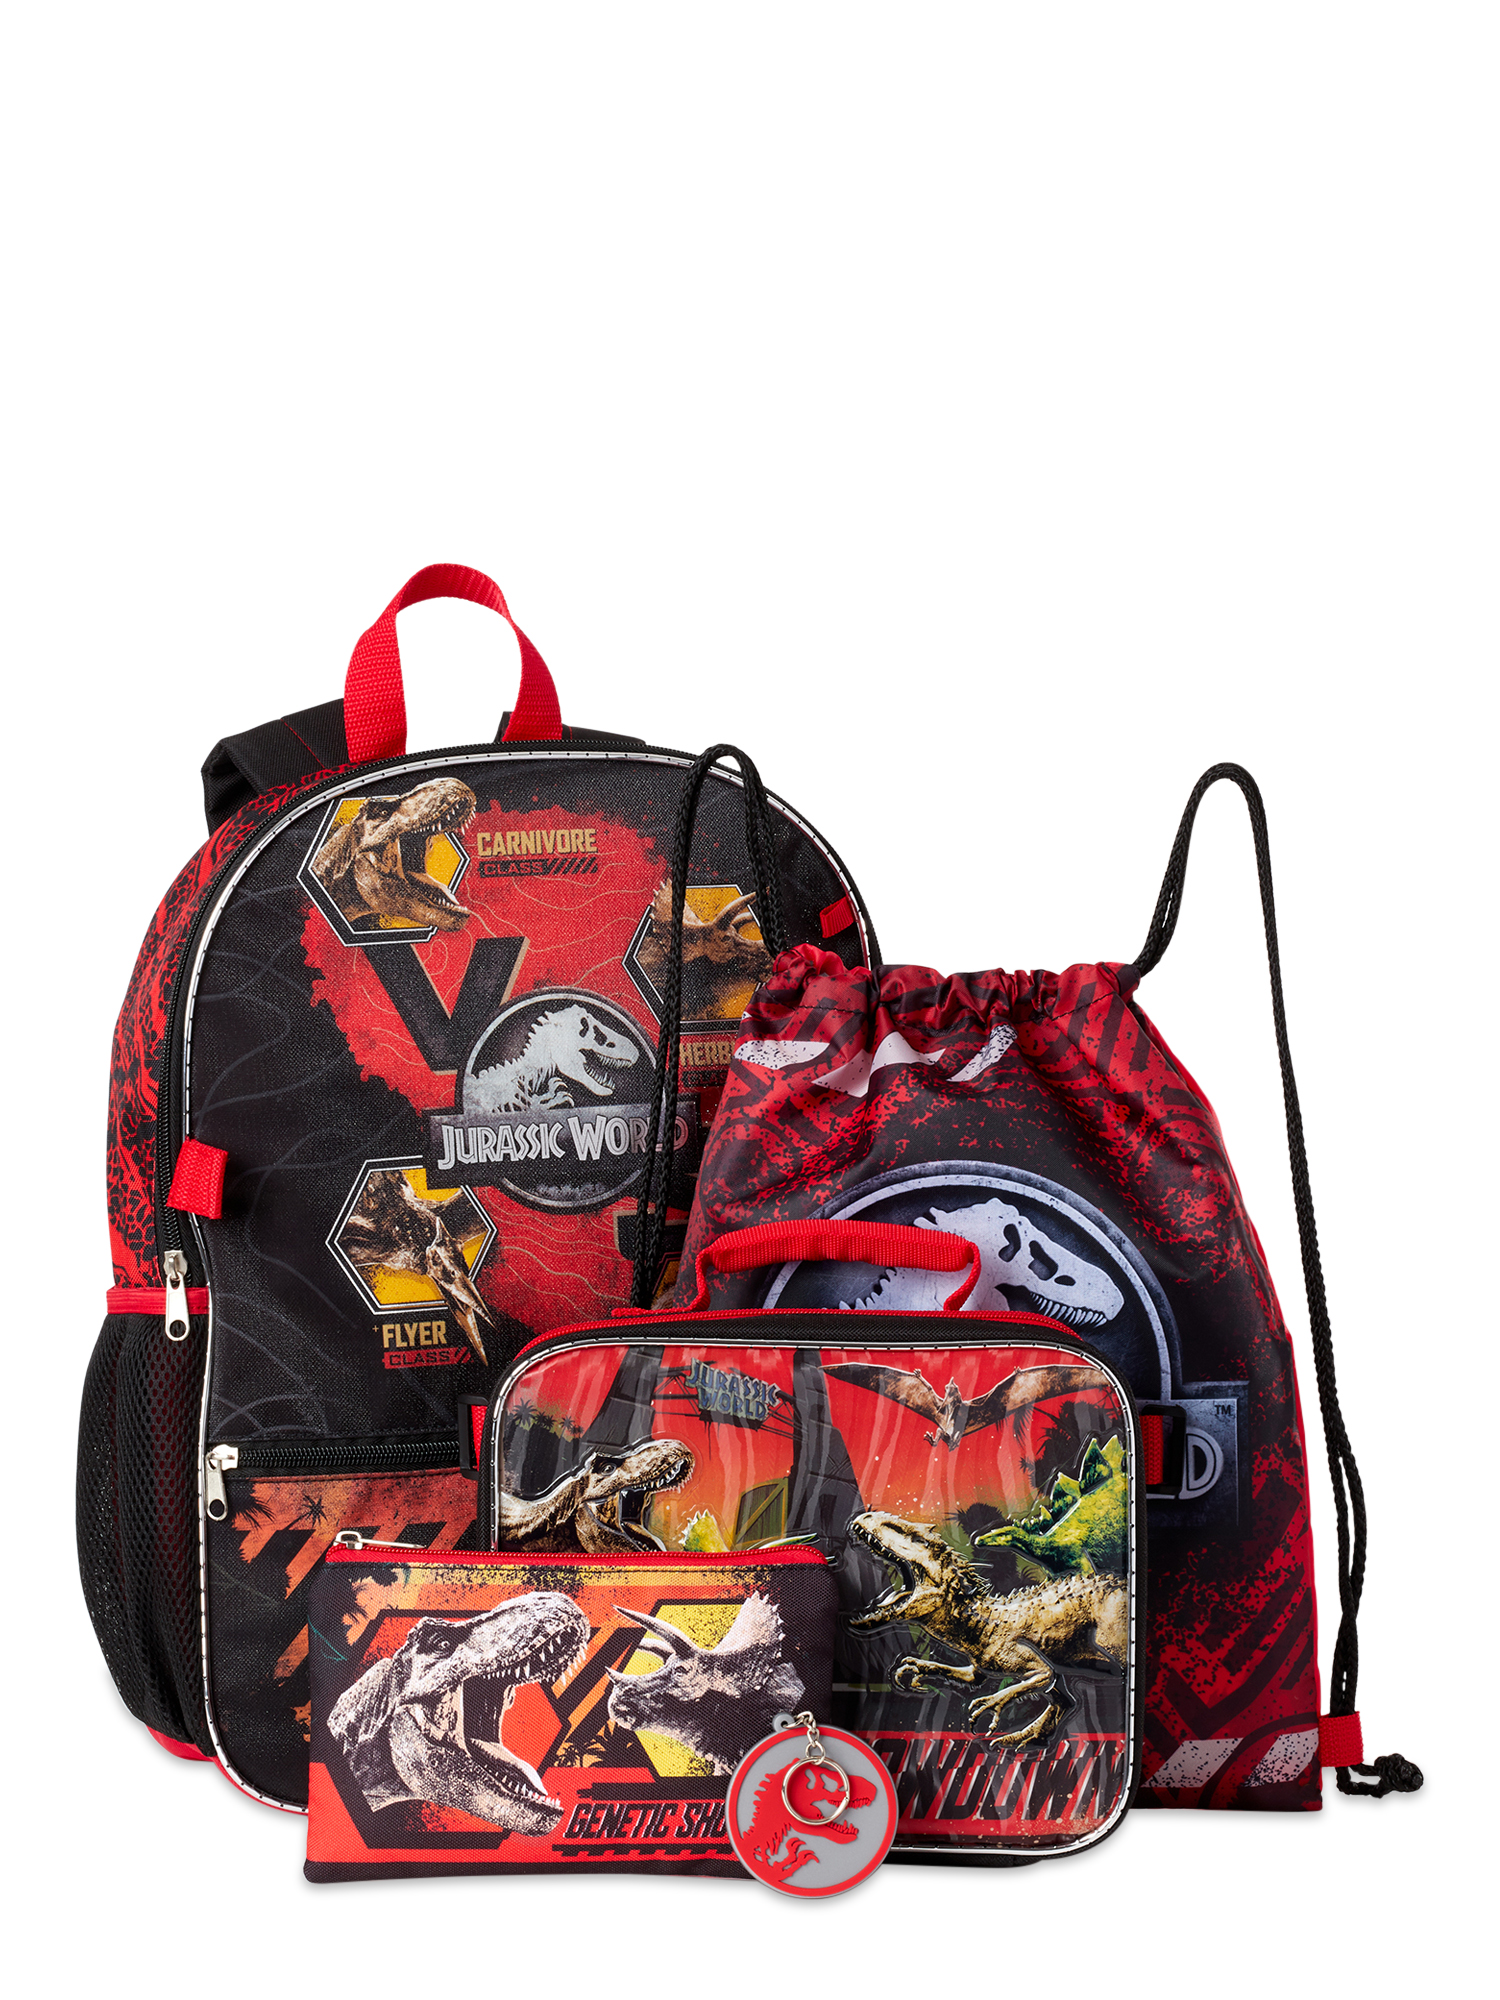 Jurassic World 5 Piece Backpack Set - image 1 of 4